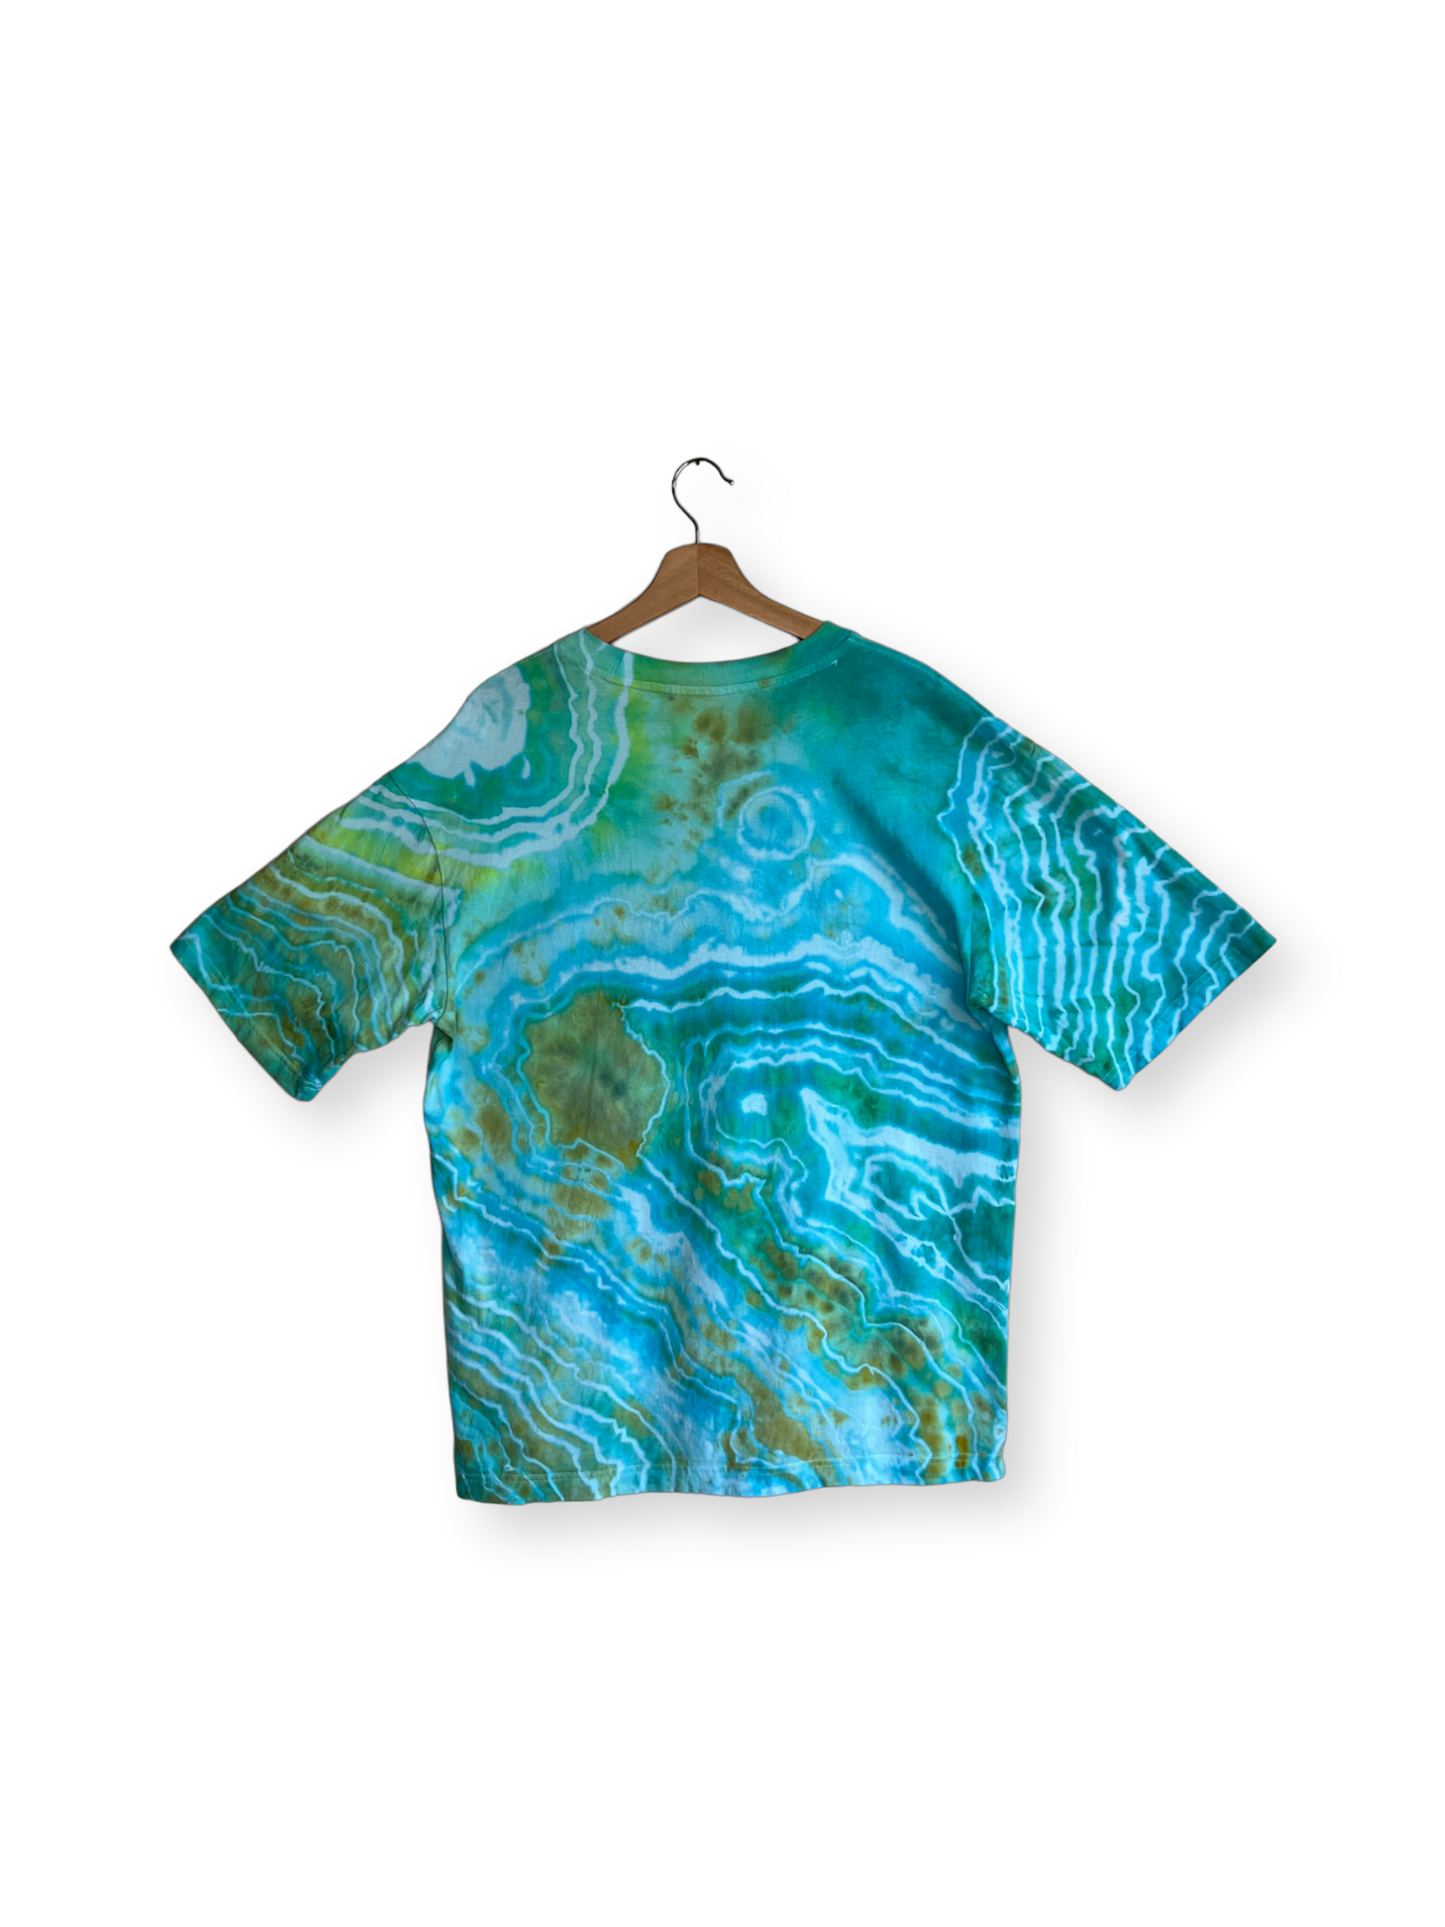 Caribbean Blue Tie Dye Oversized Pocket T-Shirt (Medium)